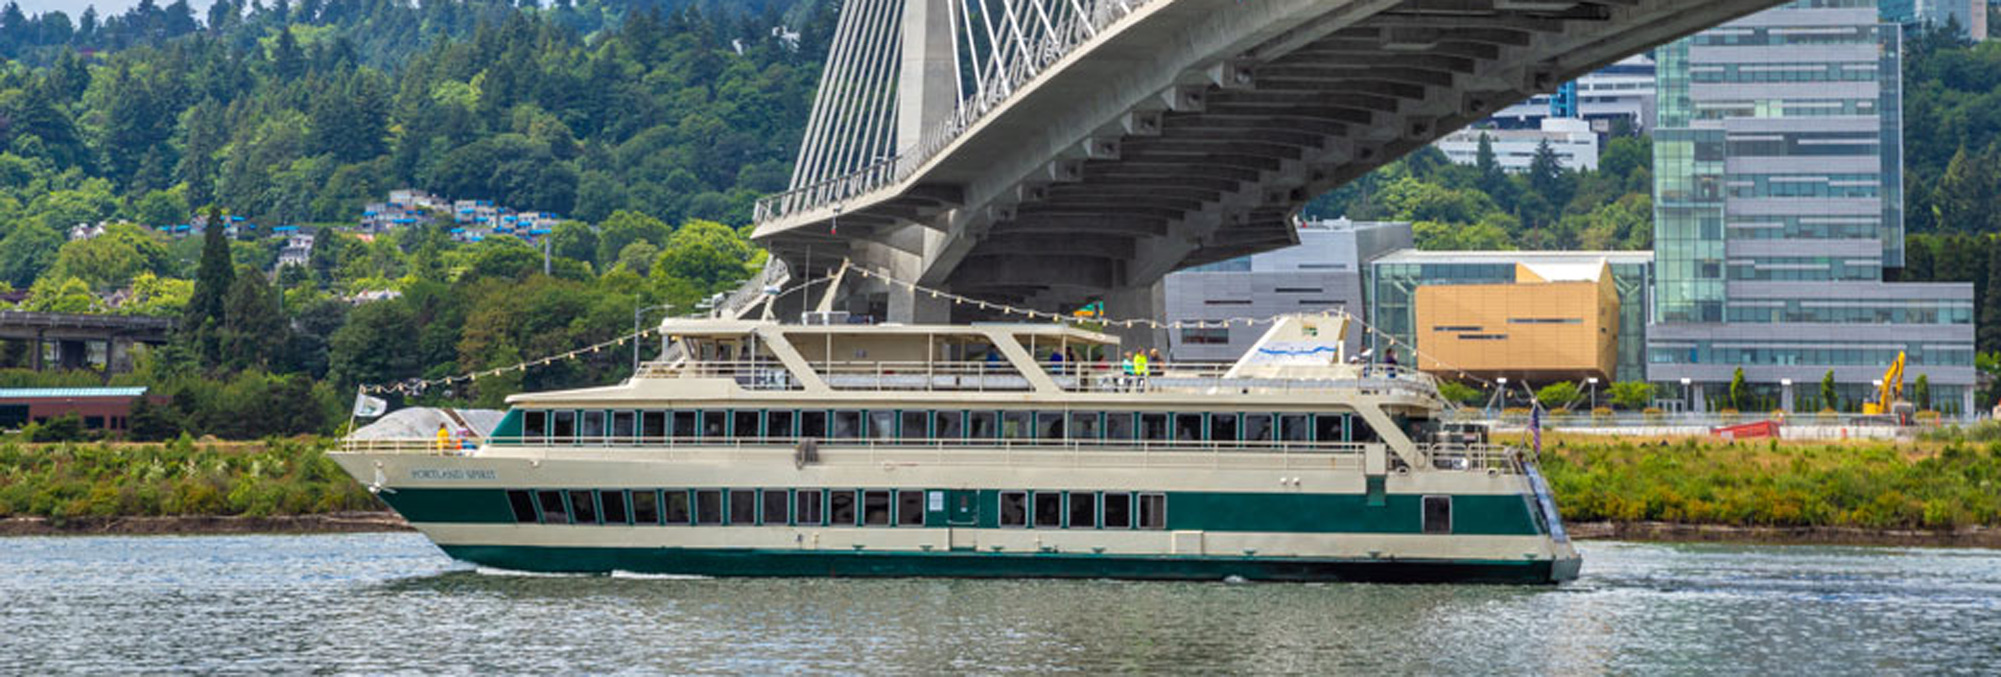 double decked boat floats on water beneath a bridge